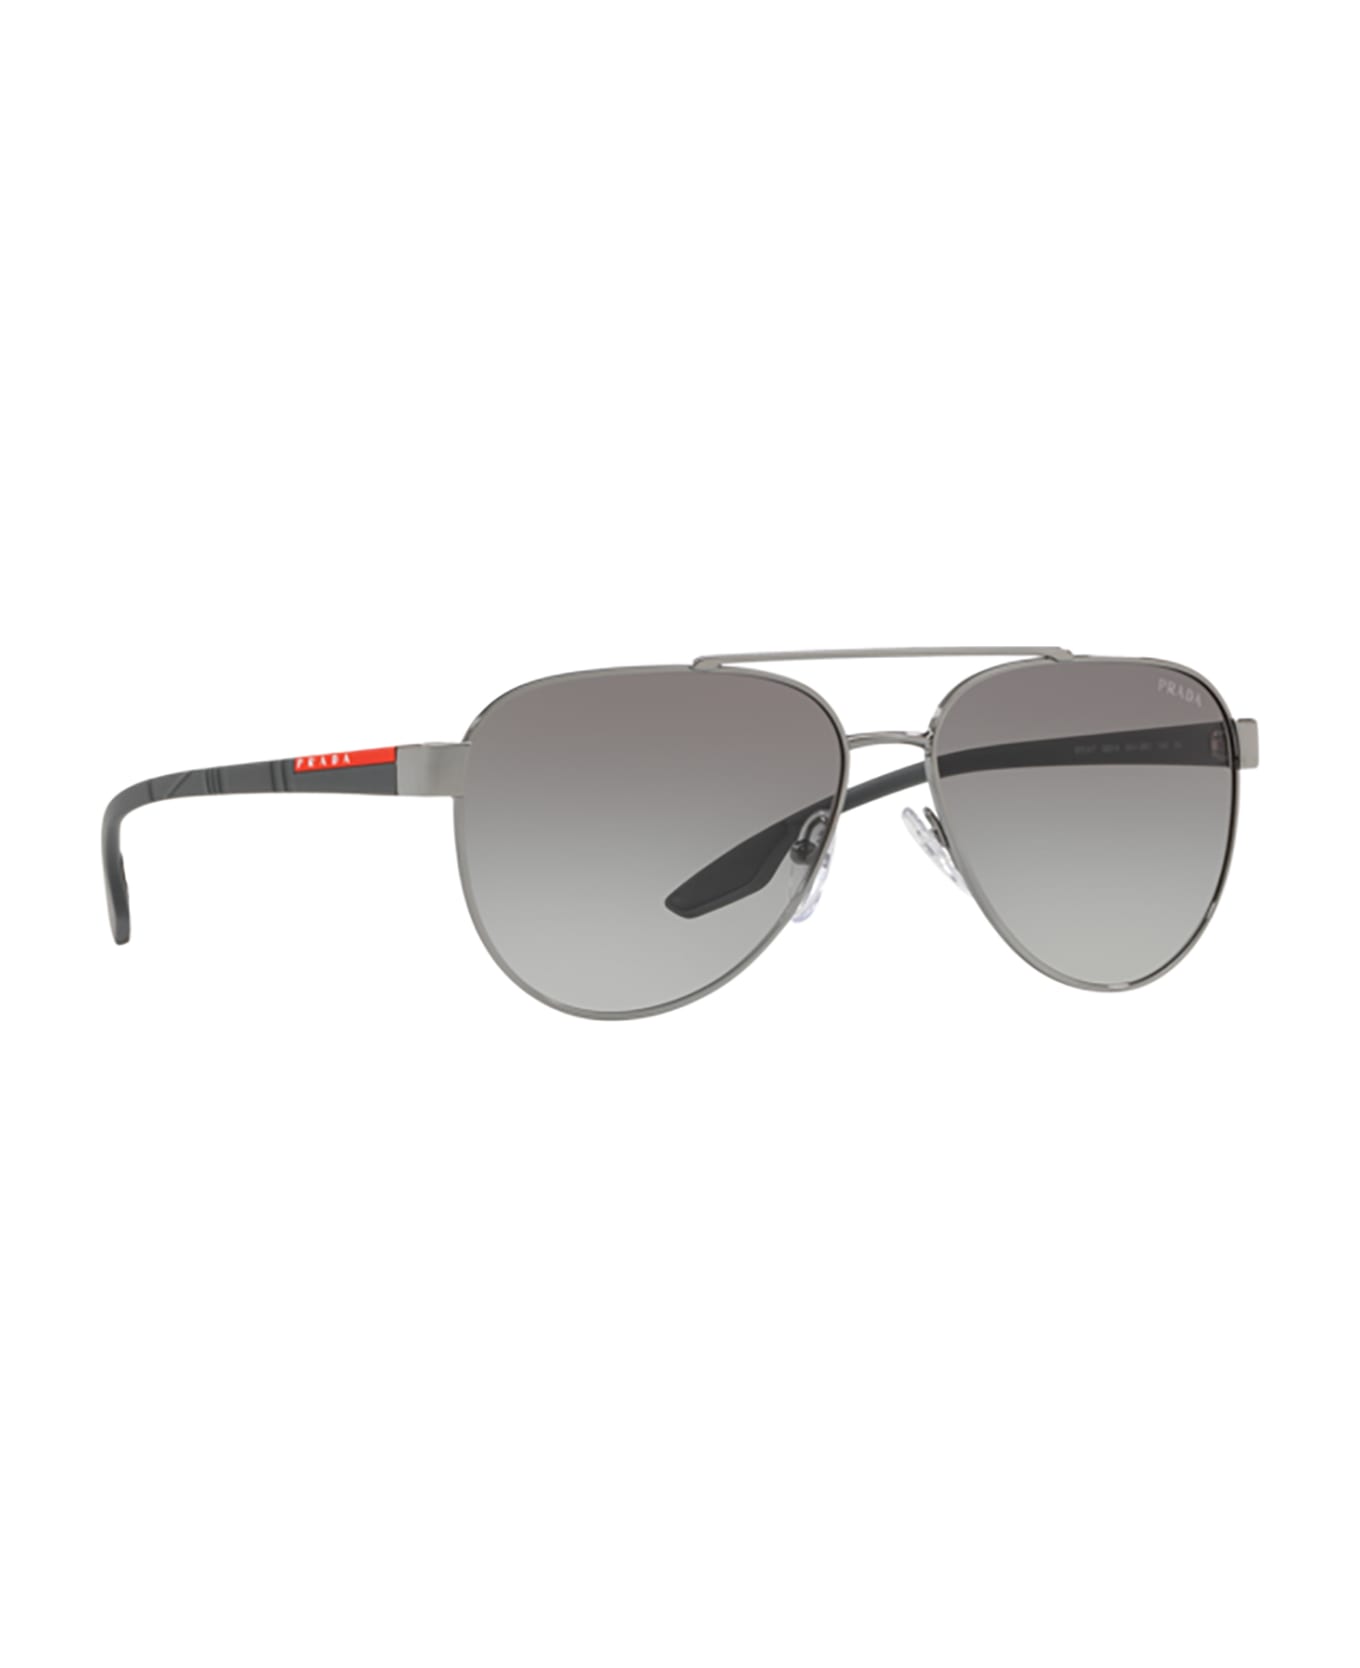 Prada Linea Rossa Ps 54ts Gunmetal Sunglasses - Gunmetal